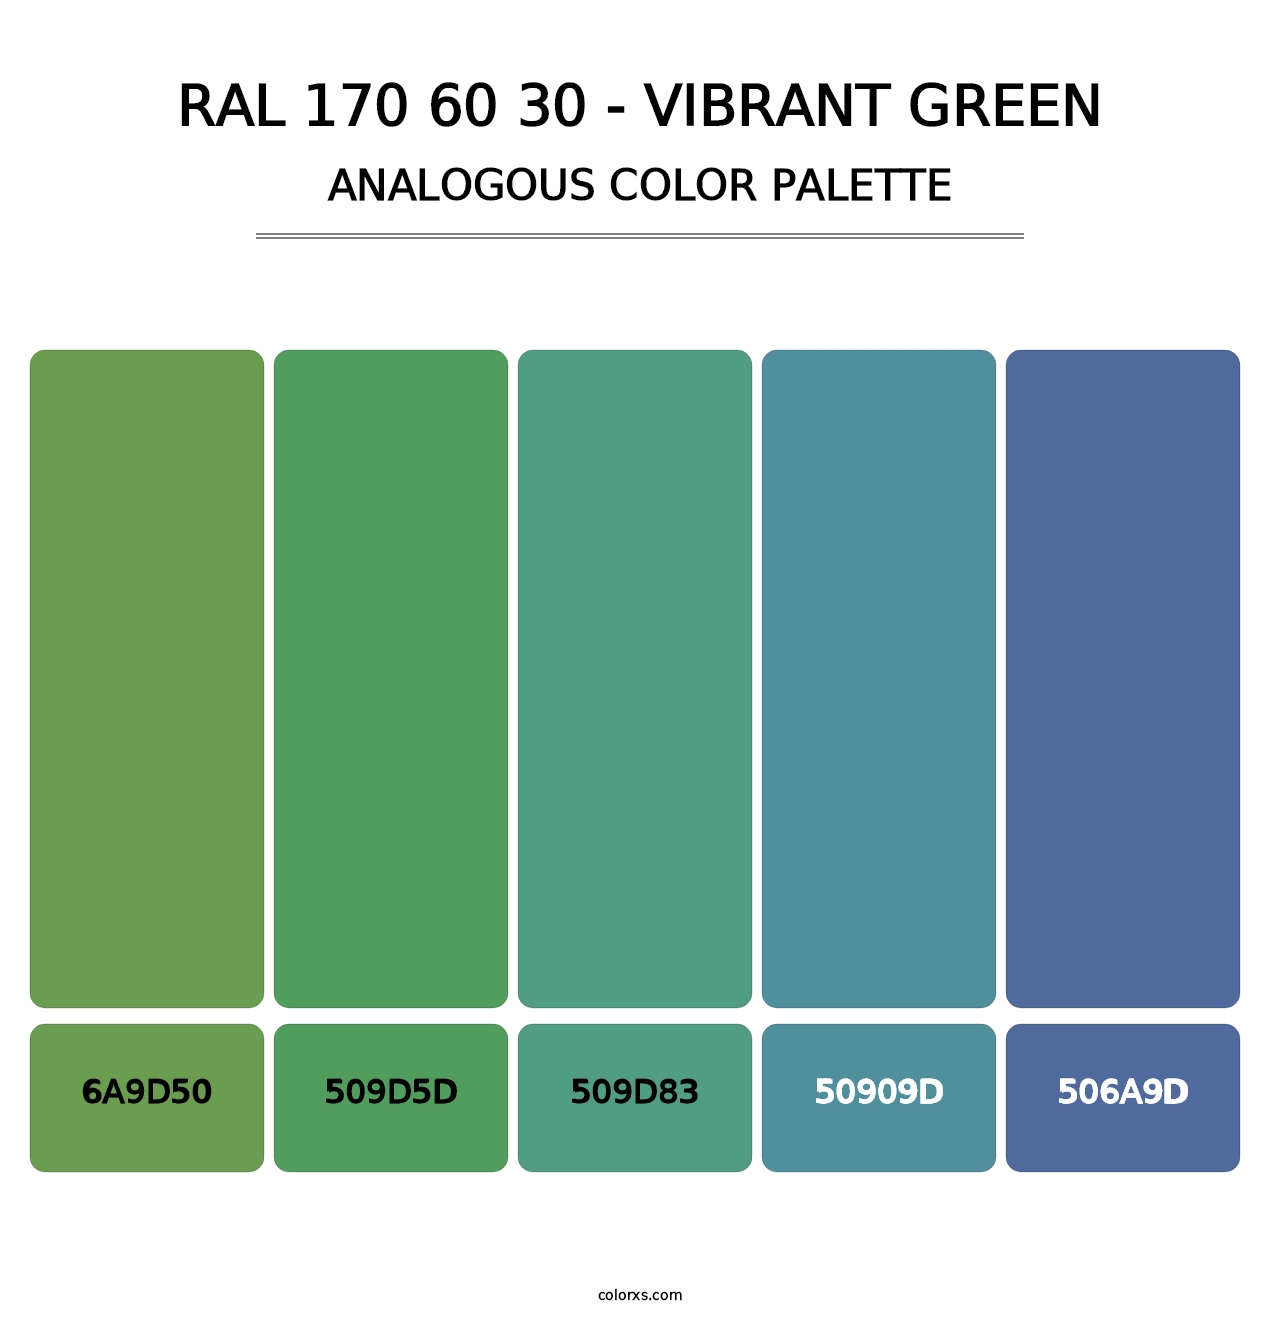 RAL 170 60 30 - Vibrant Green - Analogous Color Palette